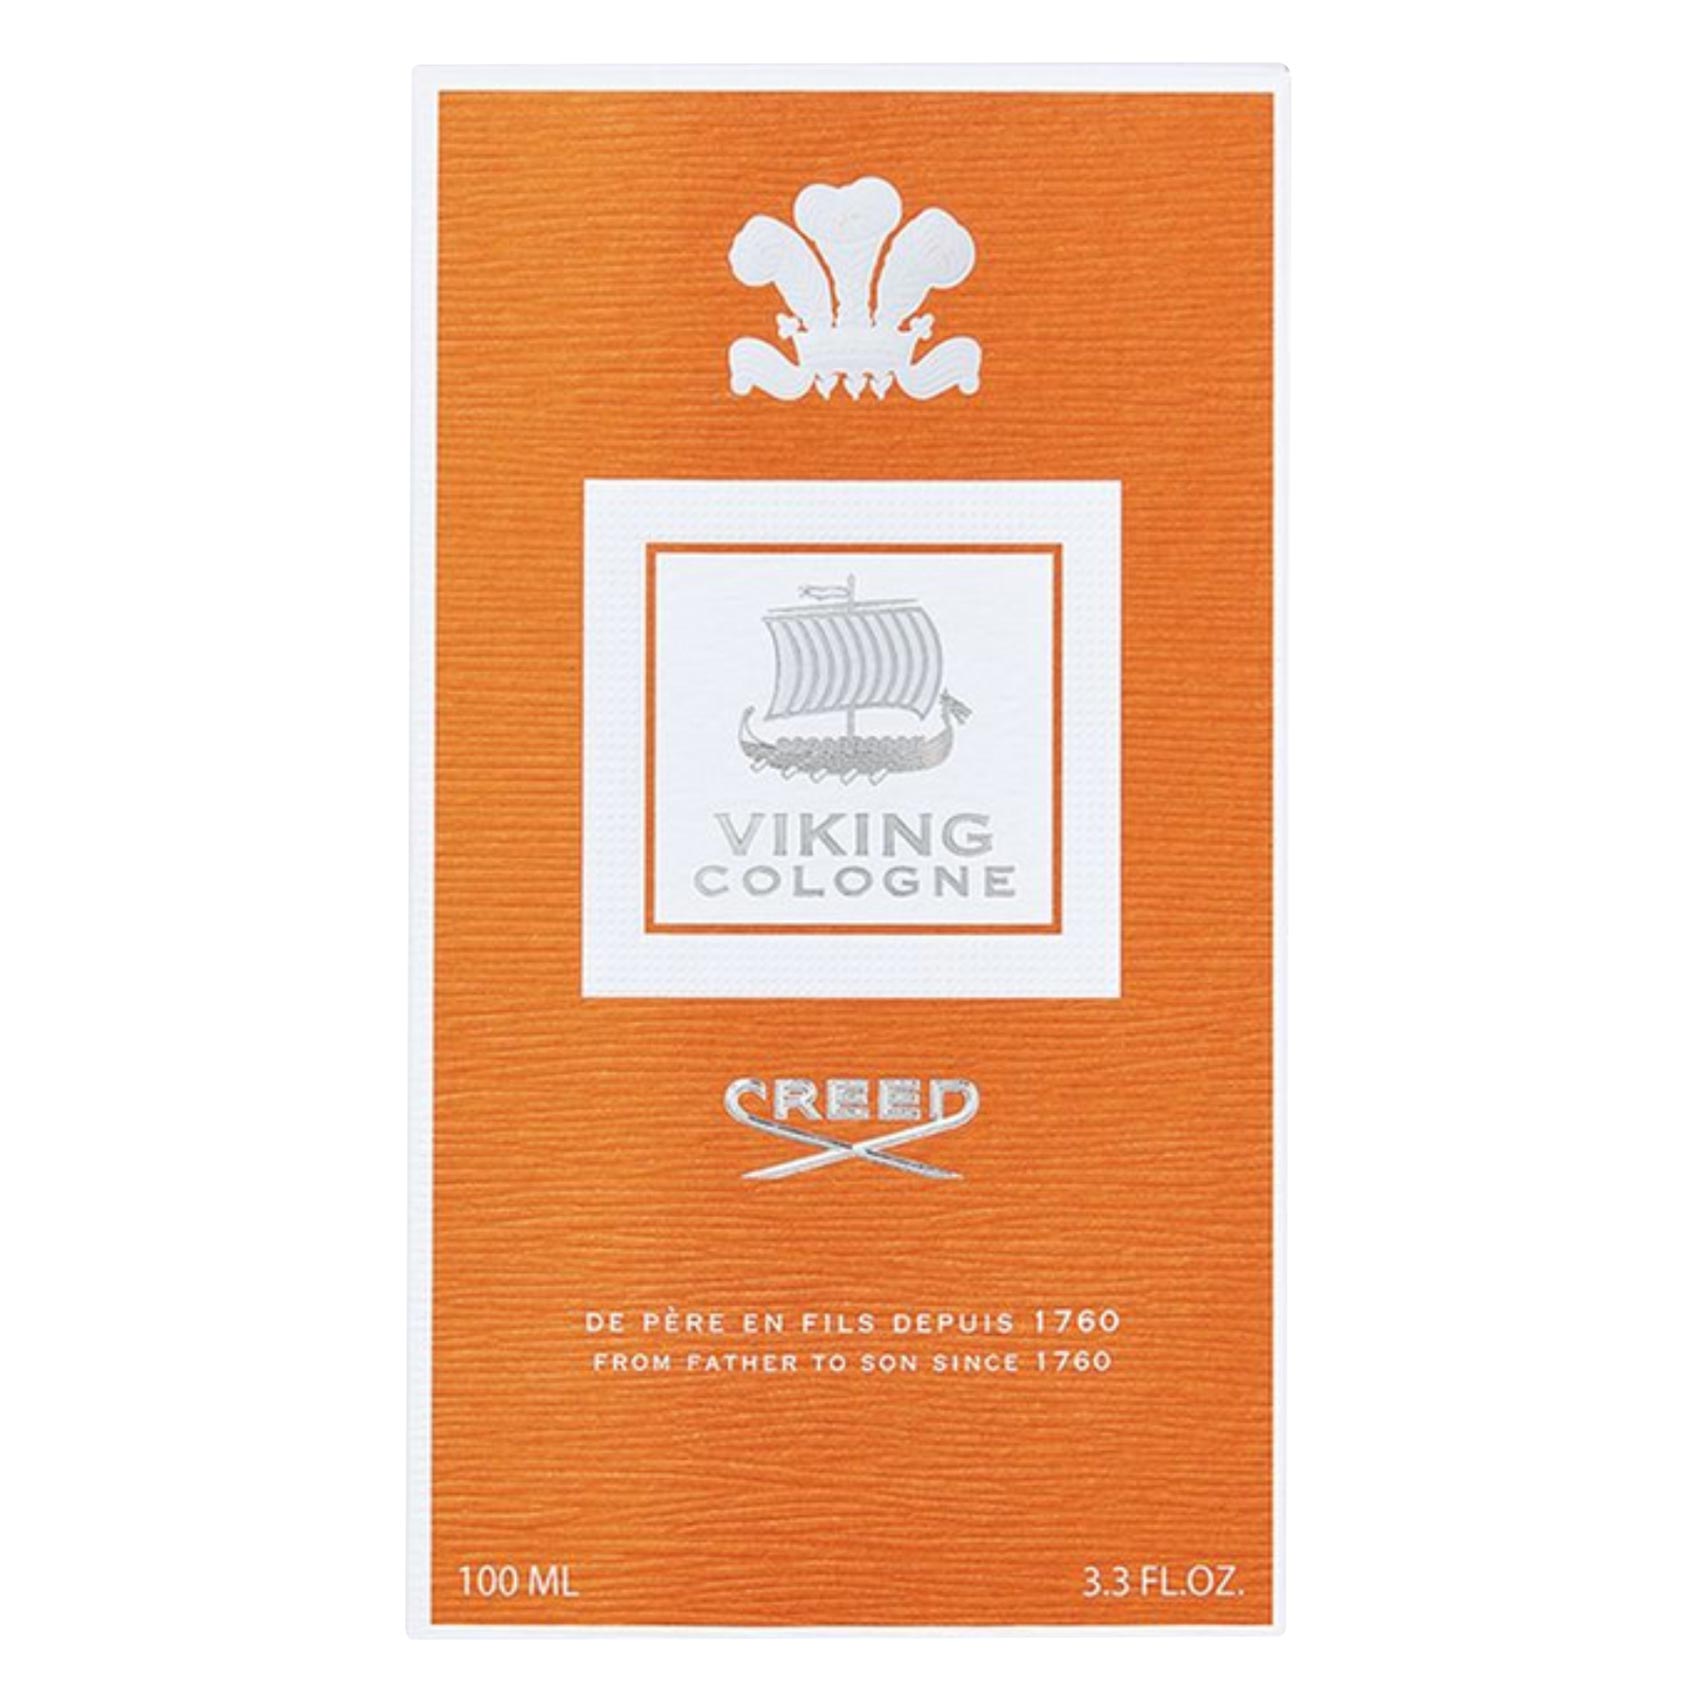 Creed Viking Cologne Perfume 100ml